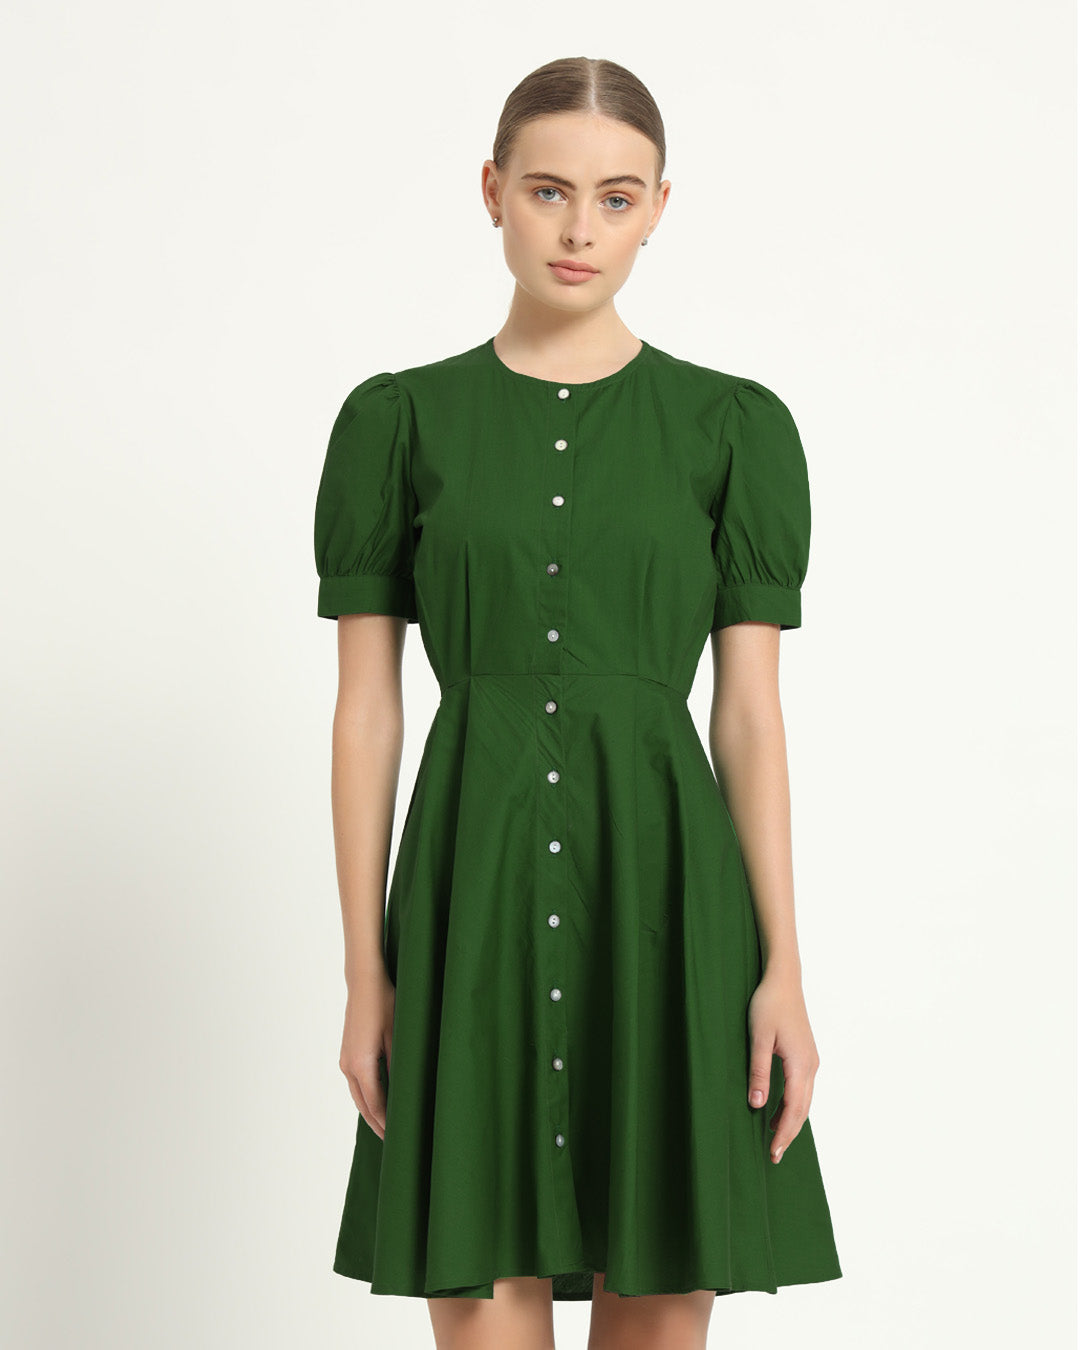 The Kittsee Emarld Cotton Dress